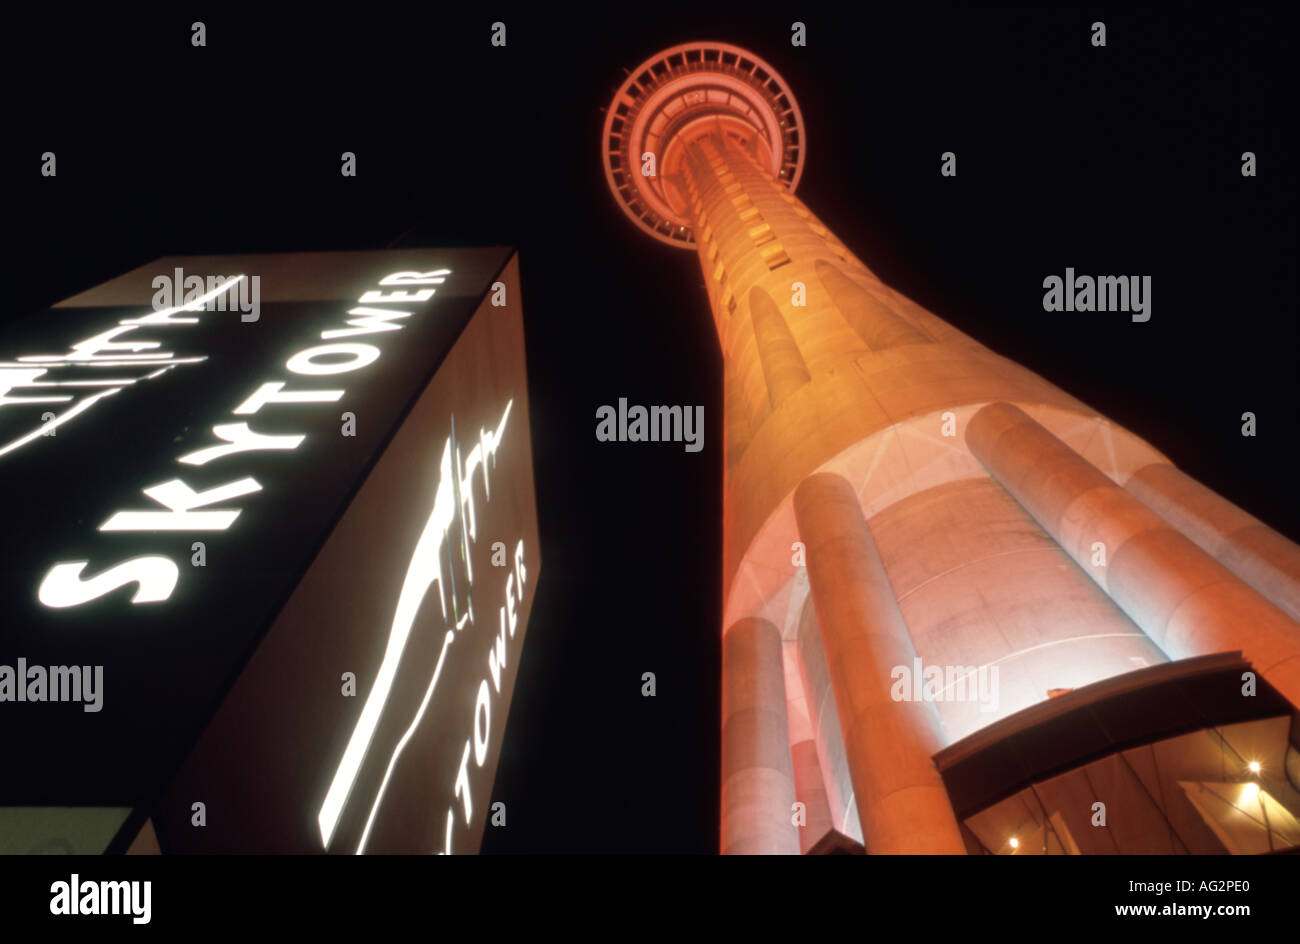 The Sky Tower Auckland New Zealand illuminated at night Stock Photo